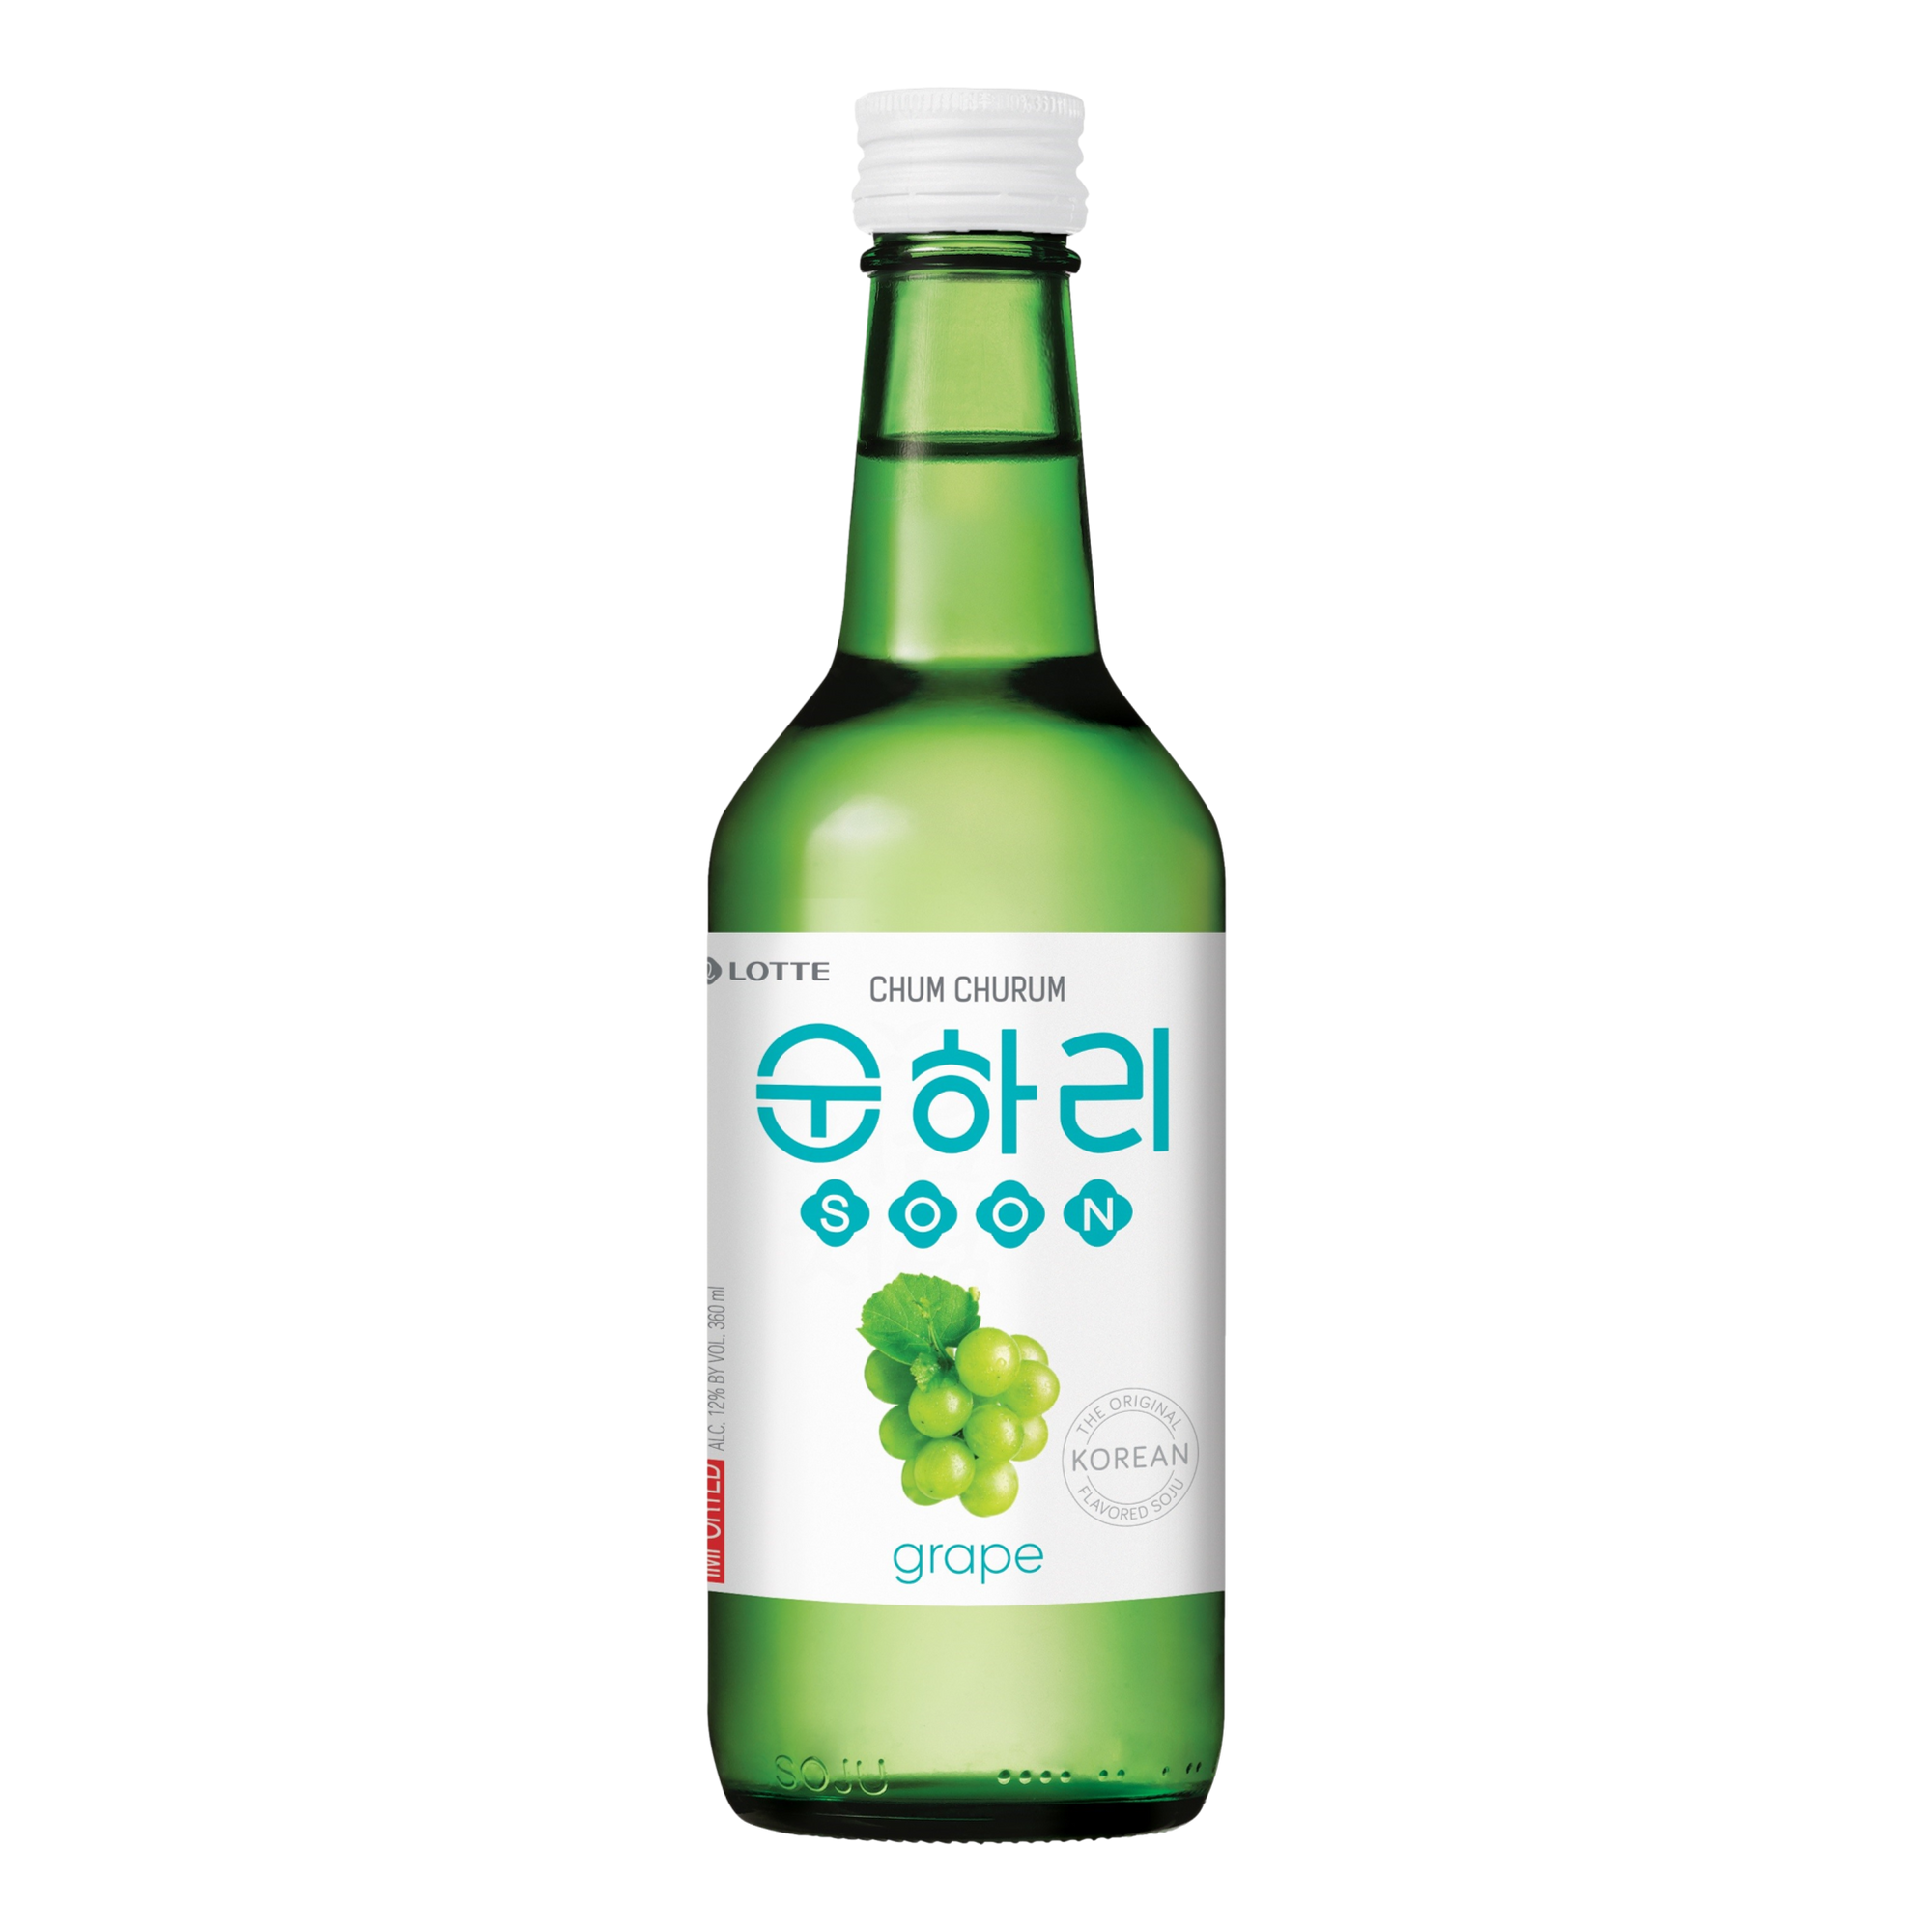 Lotte Chum Churum Grape Soju 360ml Bottle Single